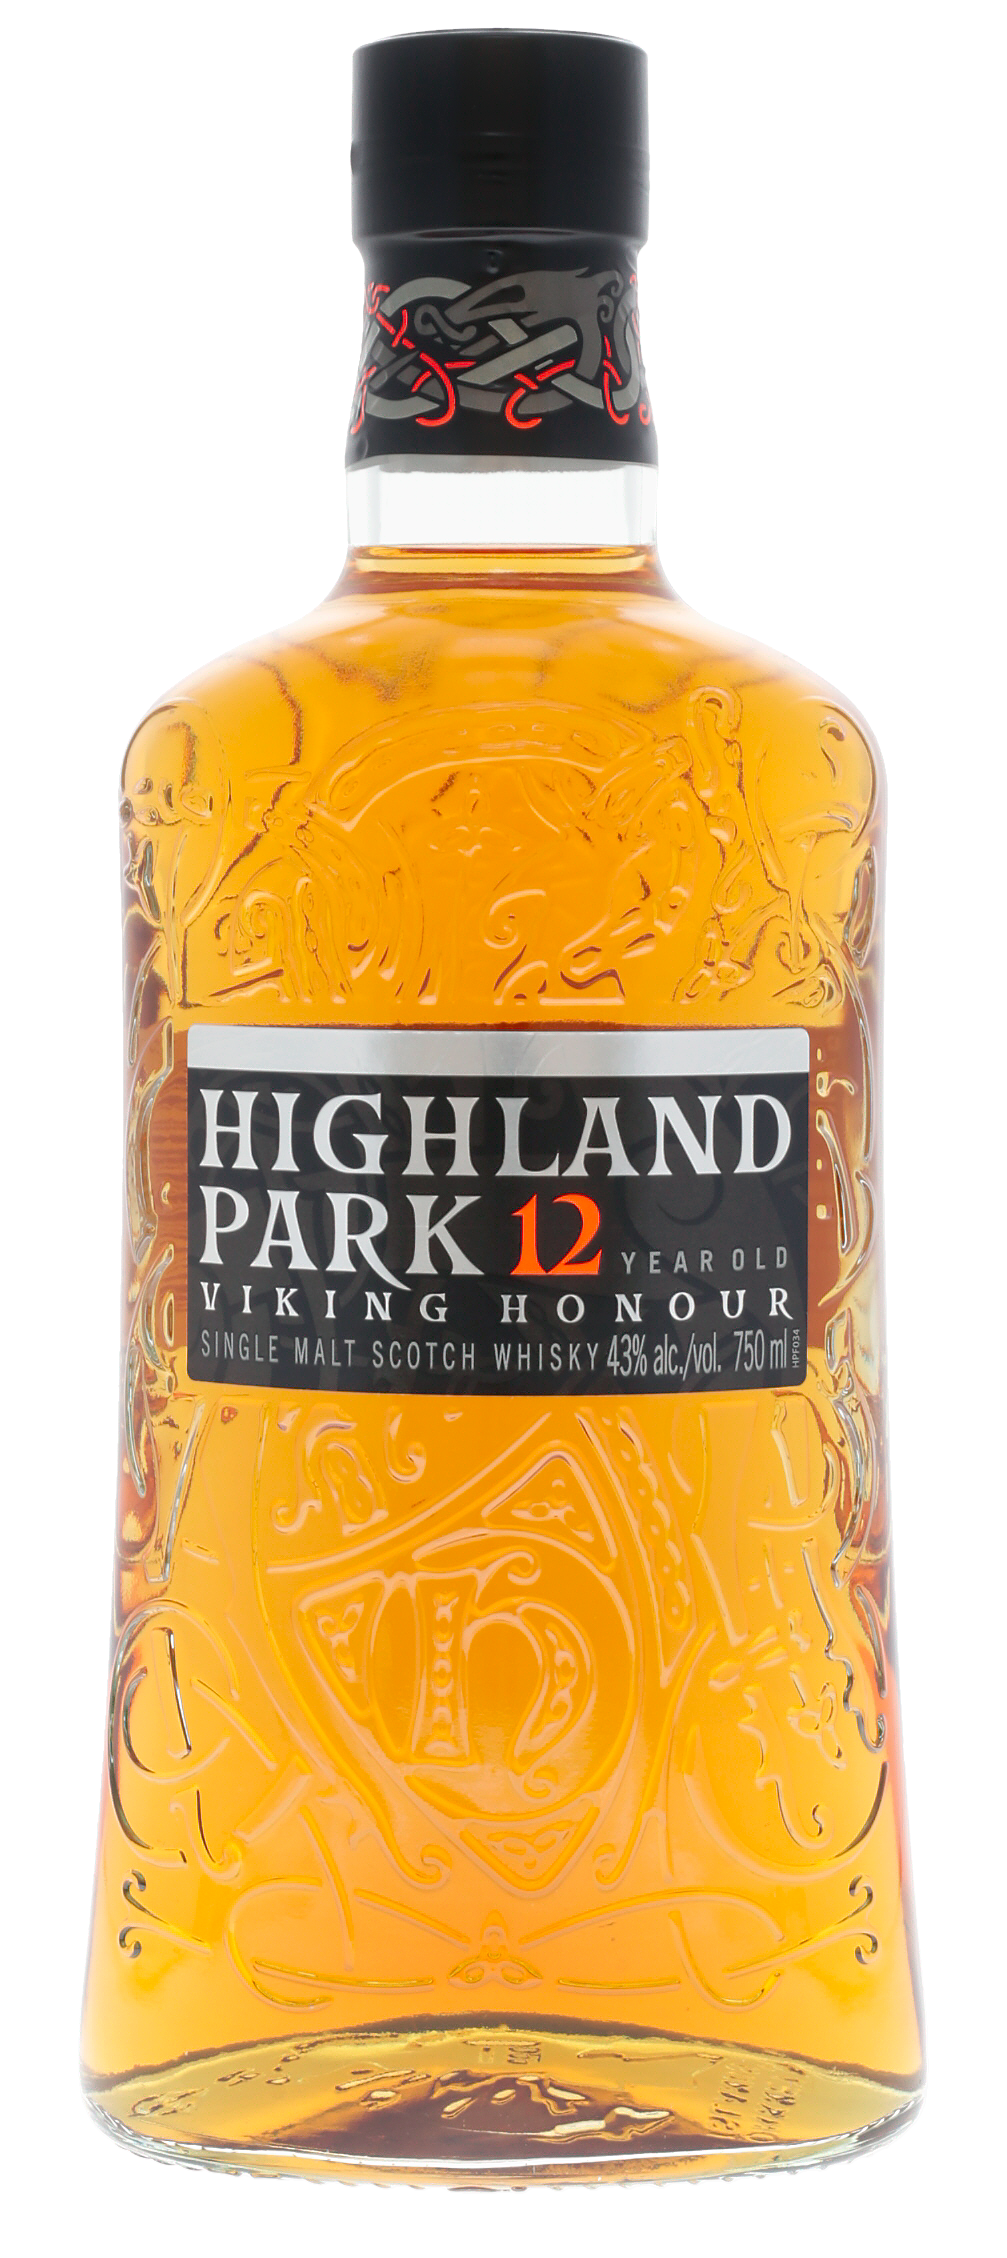 Highland Park 12 Year Old Single Malt Scotch Whisky - 750 ml bottle